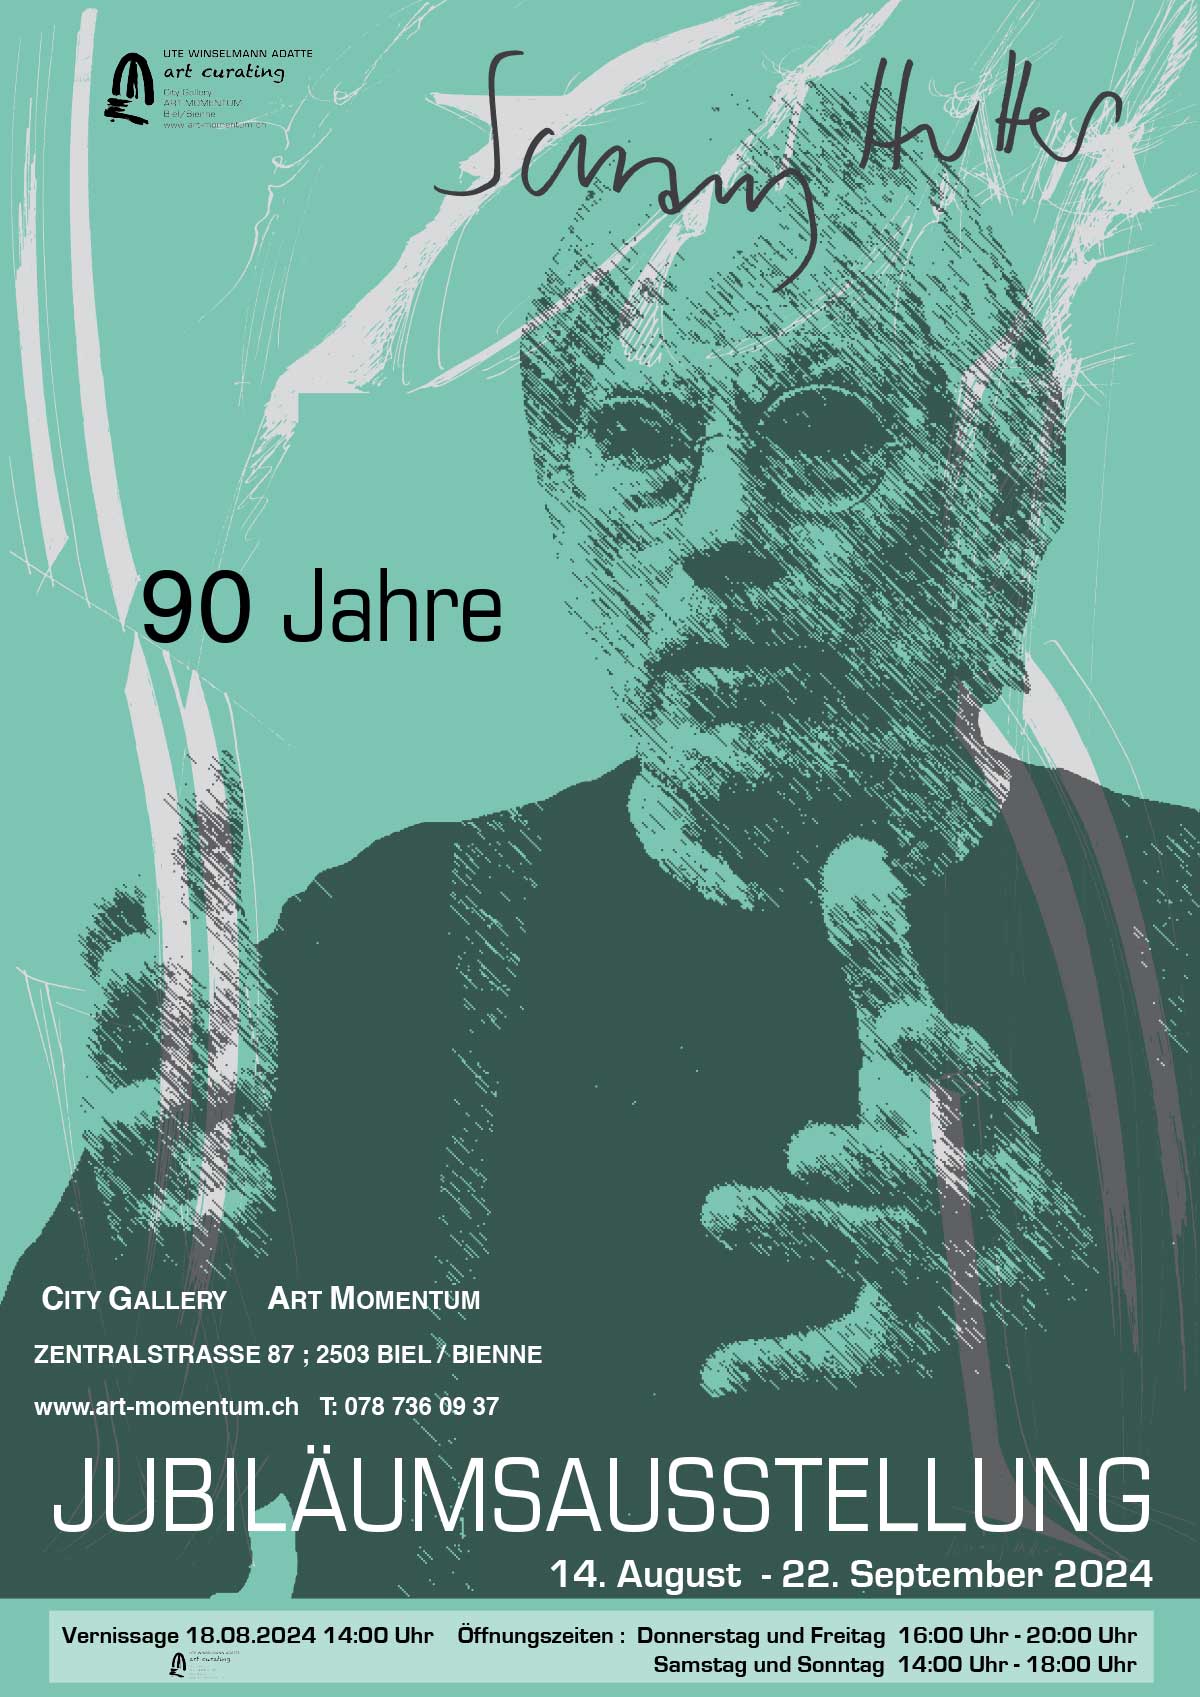 Schang Hutter - Ausstellung zum 90. Jubiläum des grossen Schweizer Bildhauers